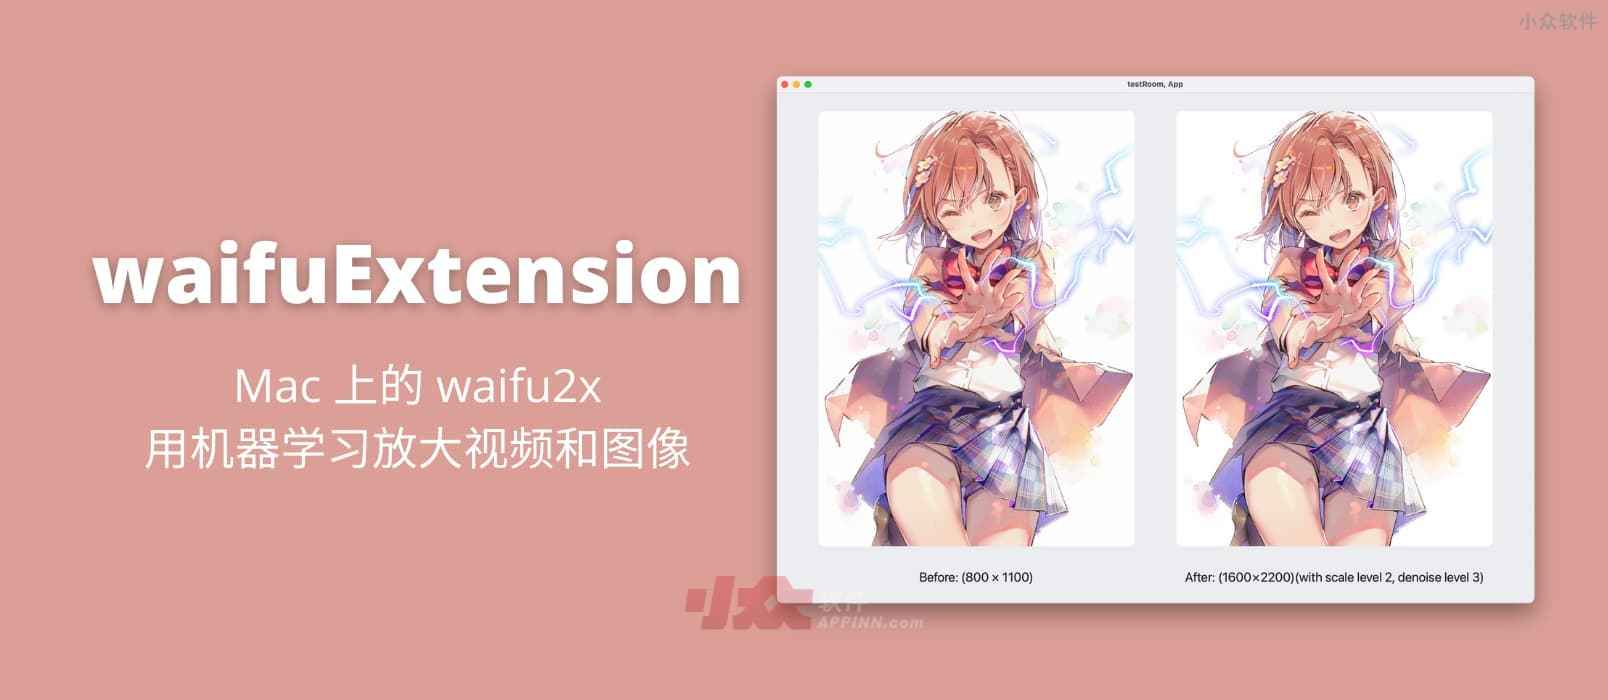 waifuExtension - Mac 上的 waifu2x，用机器学习放大视频和图像，拥有图形界面，支持 Real-ESRGAN 模型